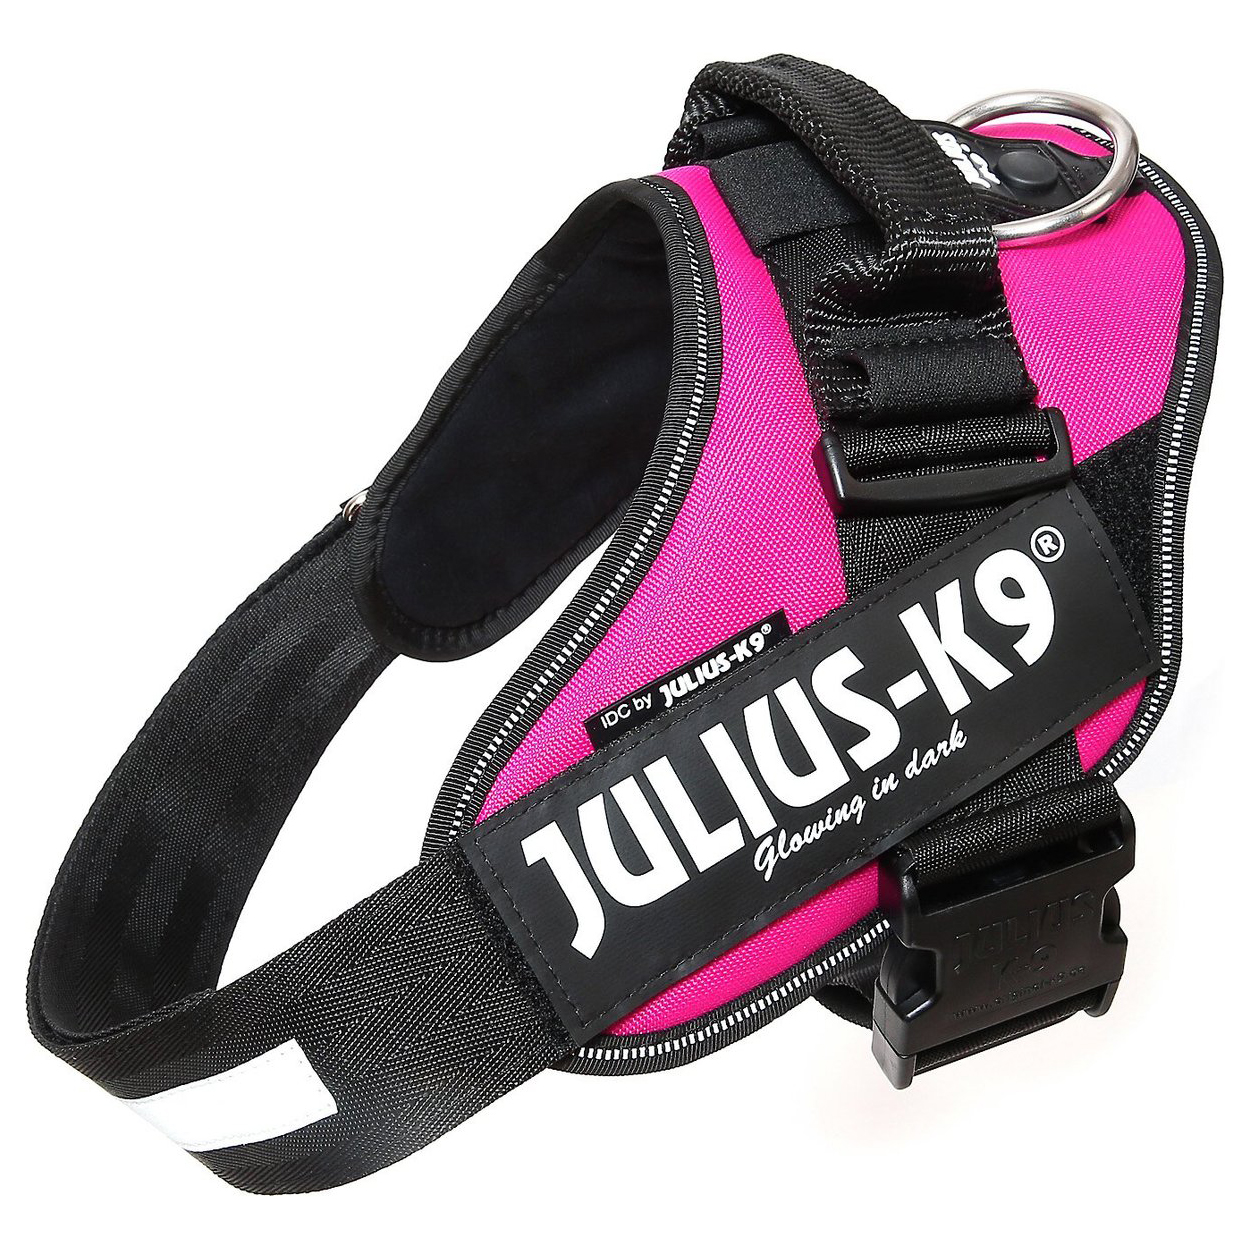 Julius K9 IDC Power Harness Nylon Reflective No Pull Harness